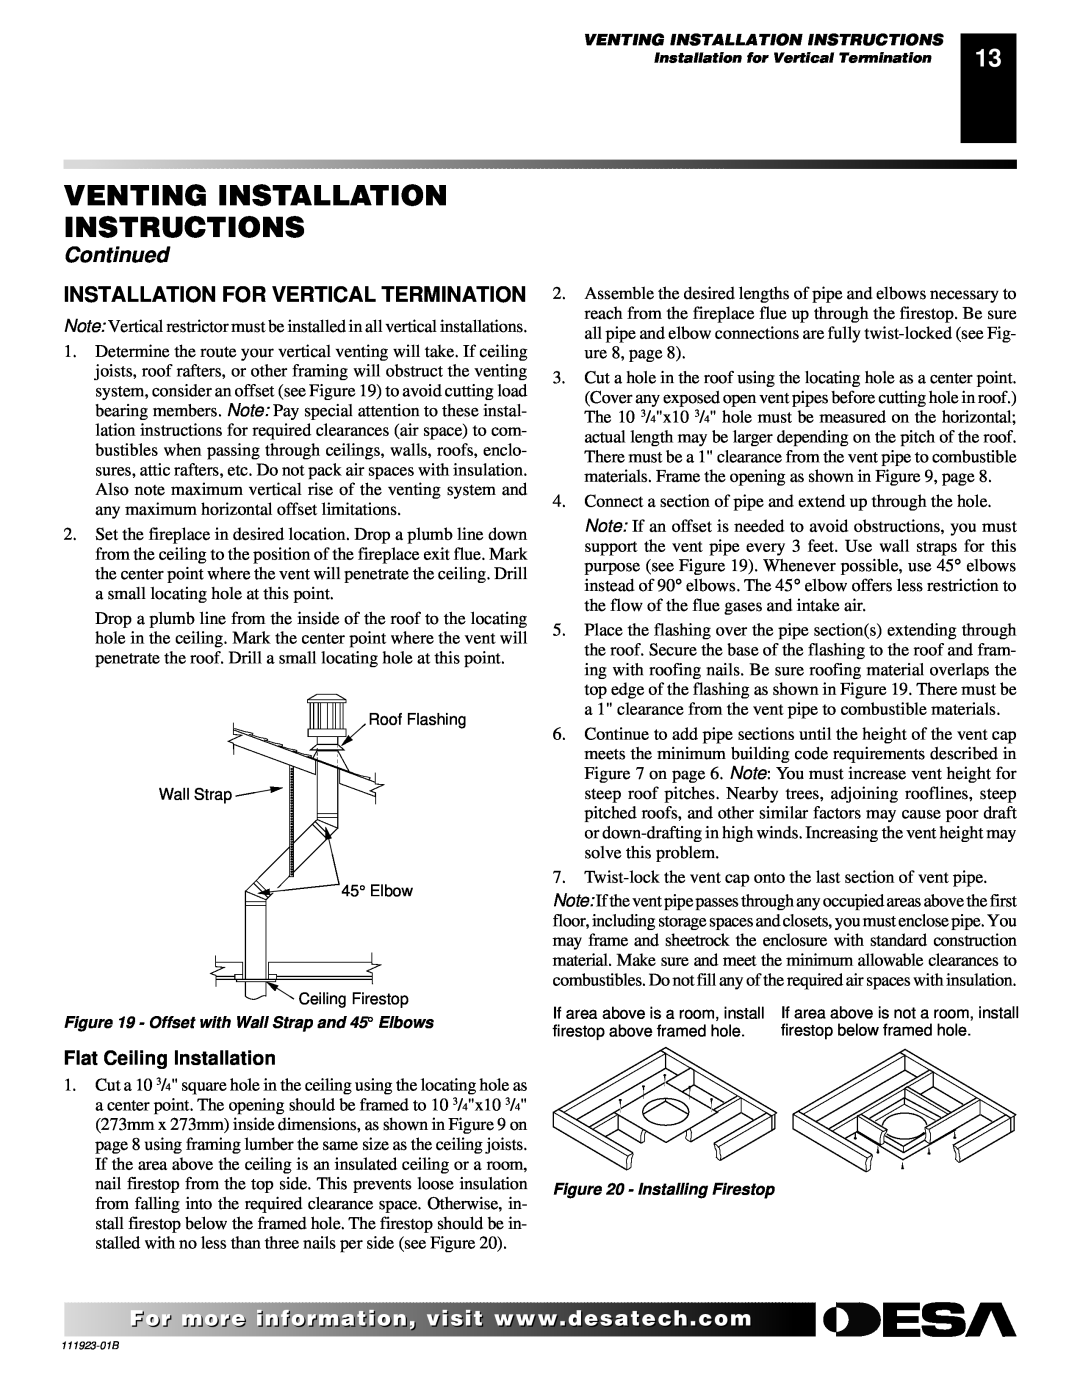 Desa (V)K36P SERIES Installation For Vertical Termination, Flat Ceiling Installation, Venting Installation Instructions 